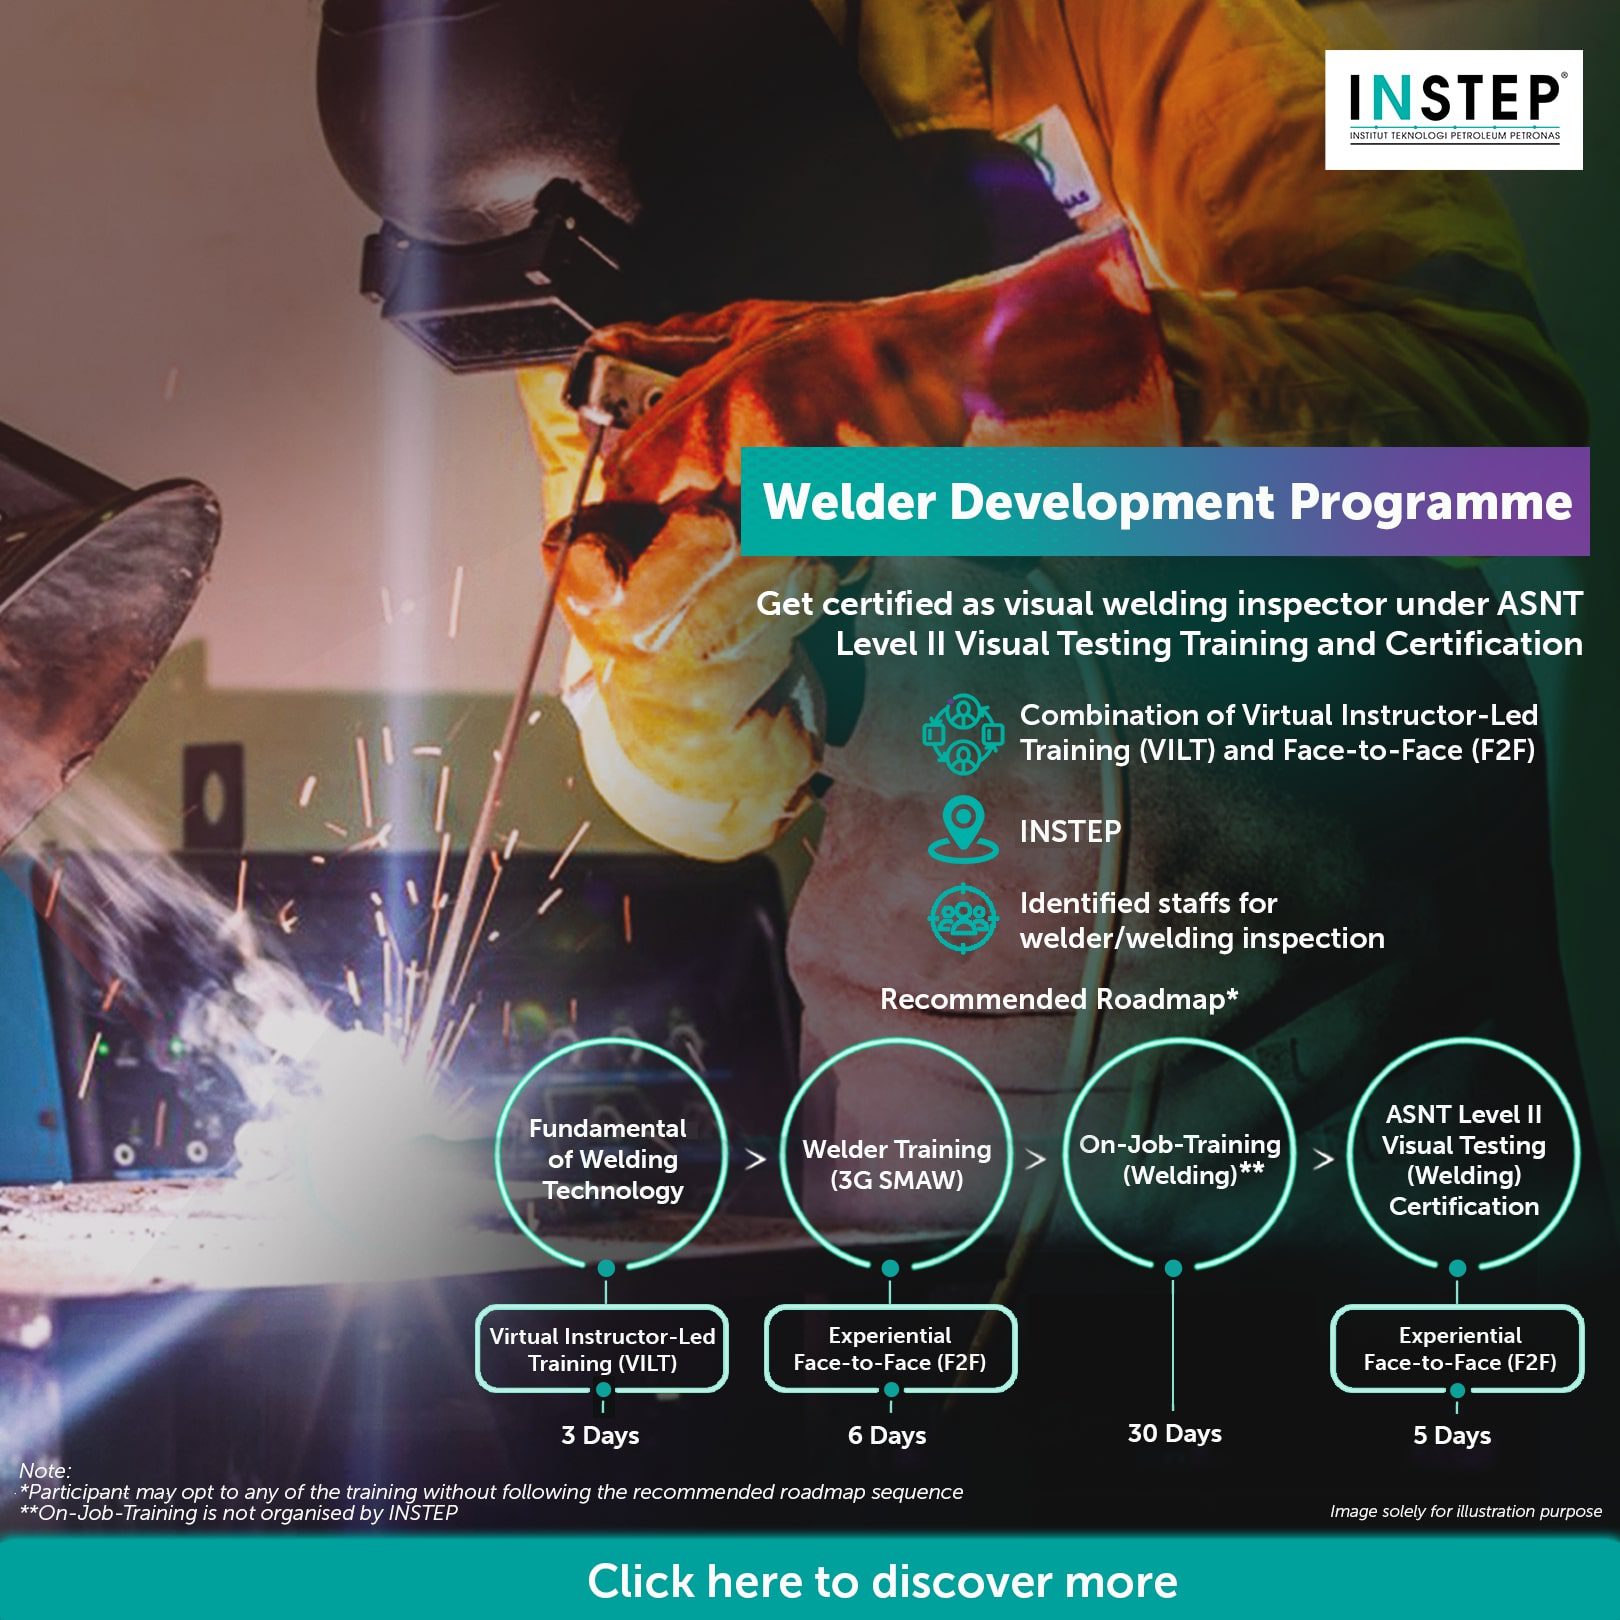 [NEW] Upcoming Welder Development Programme via Virtual Instructor-Led Training (VILT) & Face-To-Face (F2F)